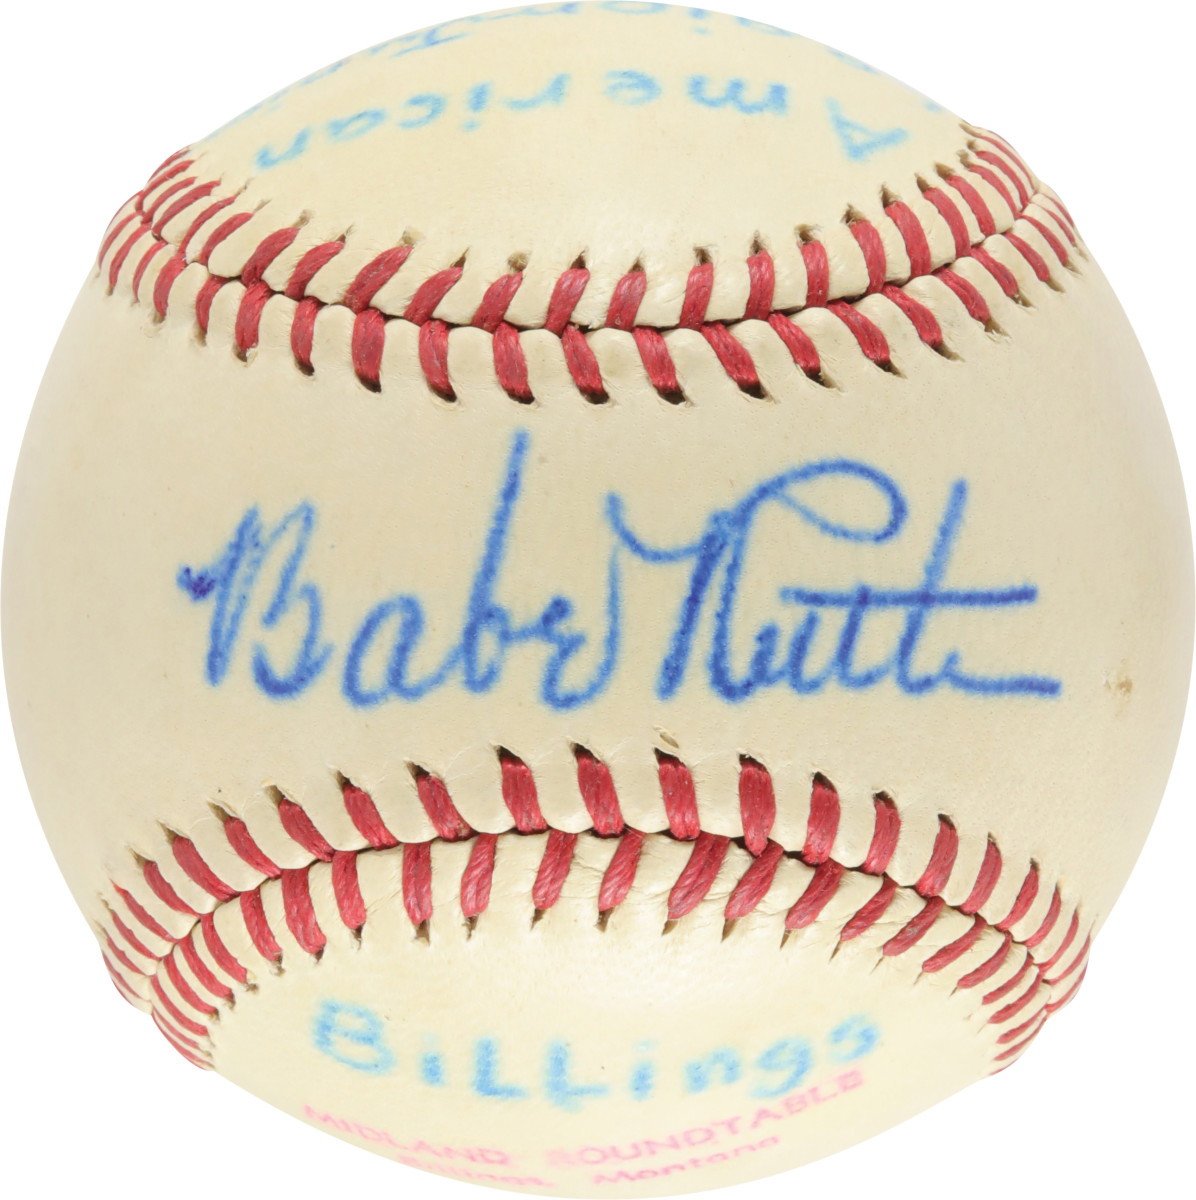 Babe Ruth Photos for Sale